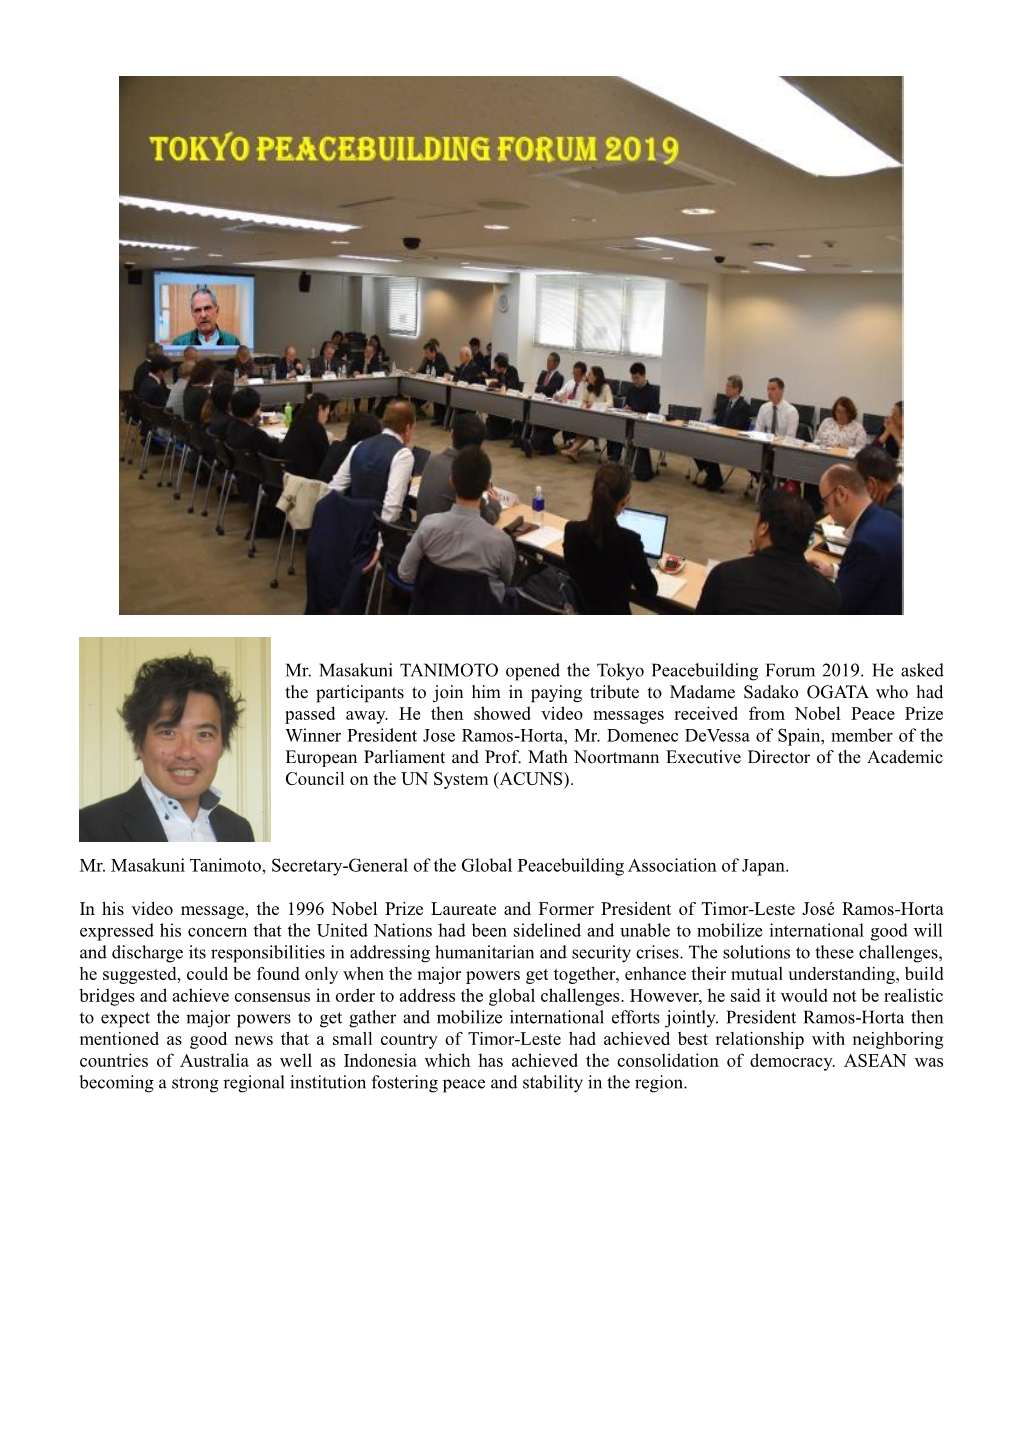 Mr. Masakuni TANIMOTO Opened the Tokyo Peacebuilding Forum 2019